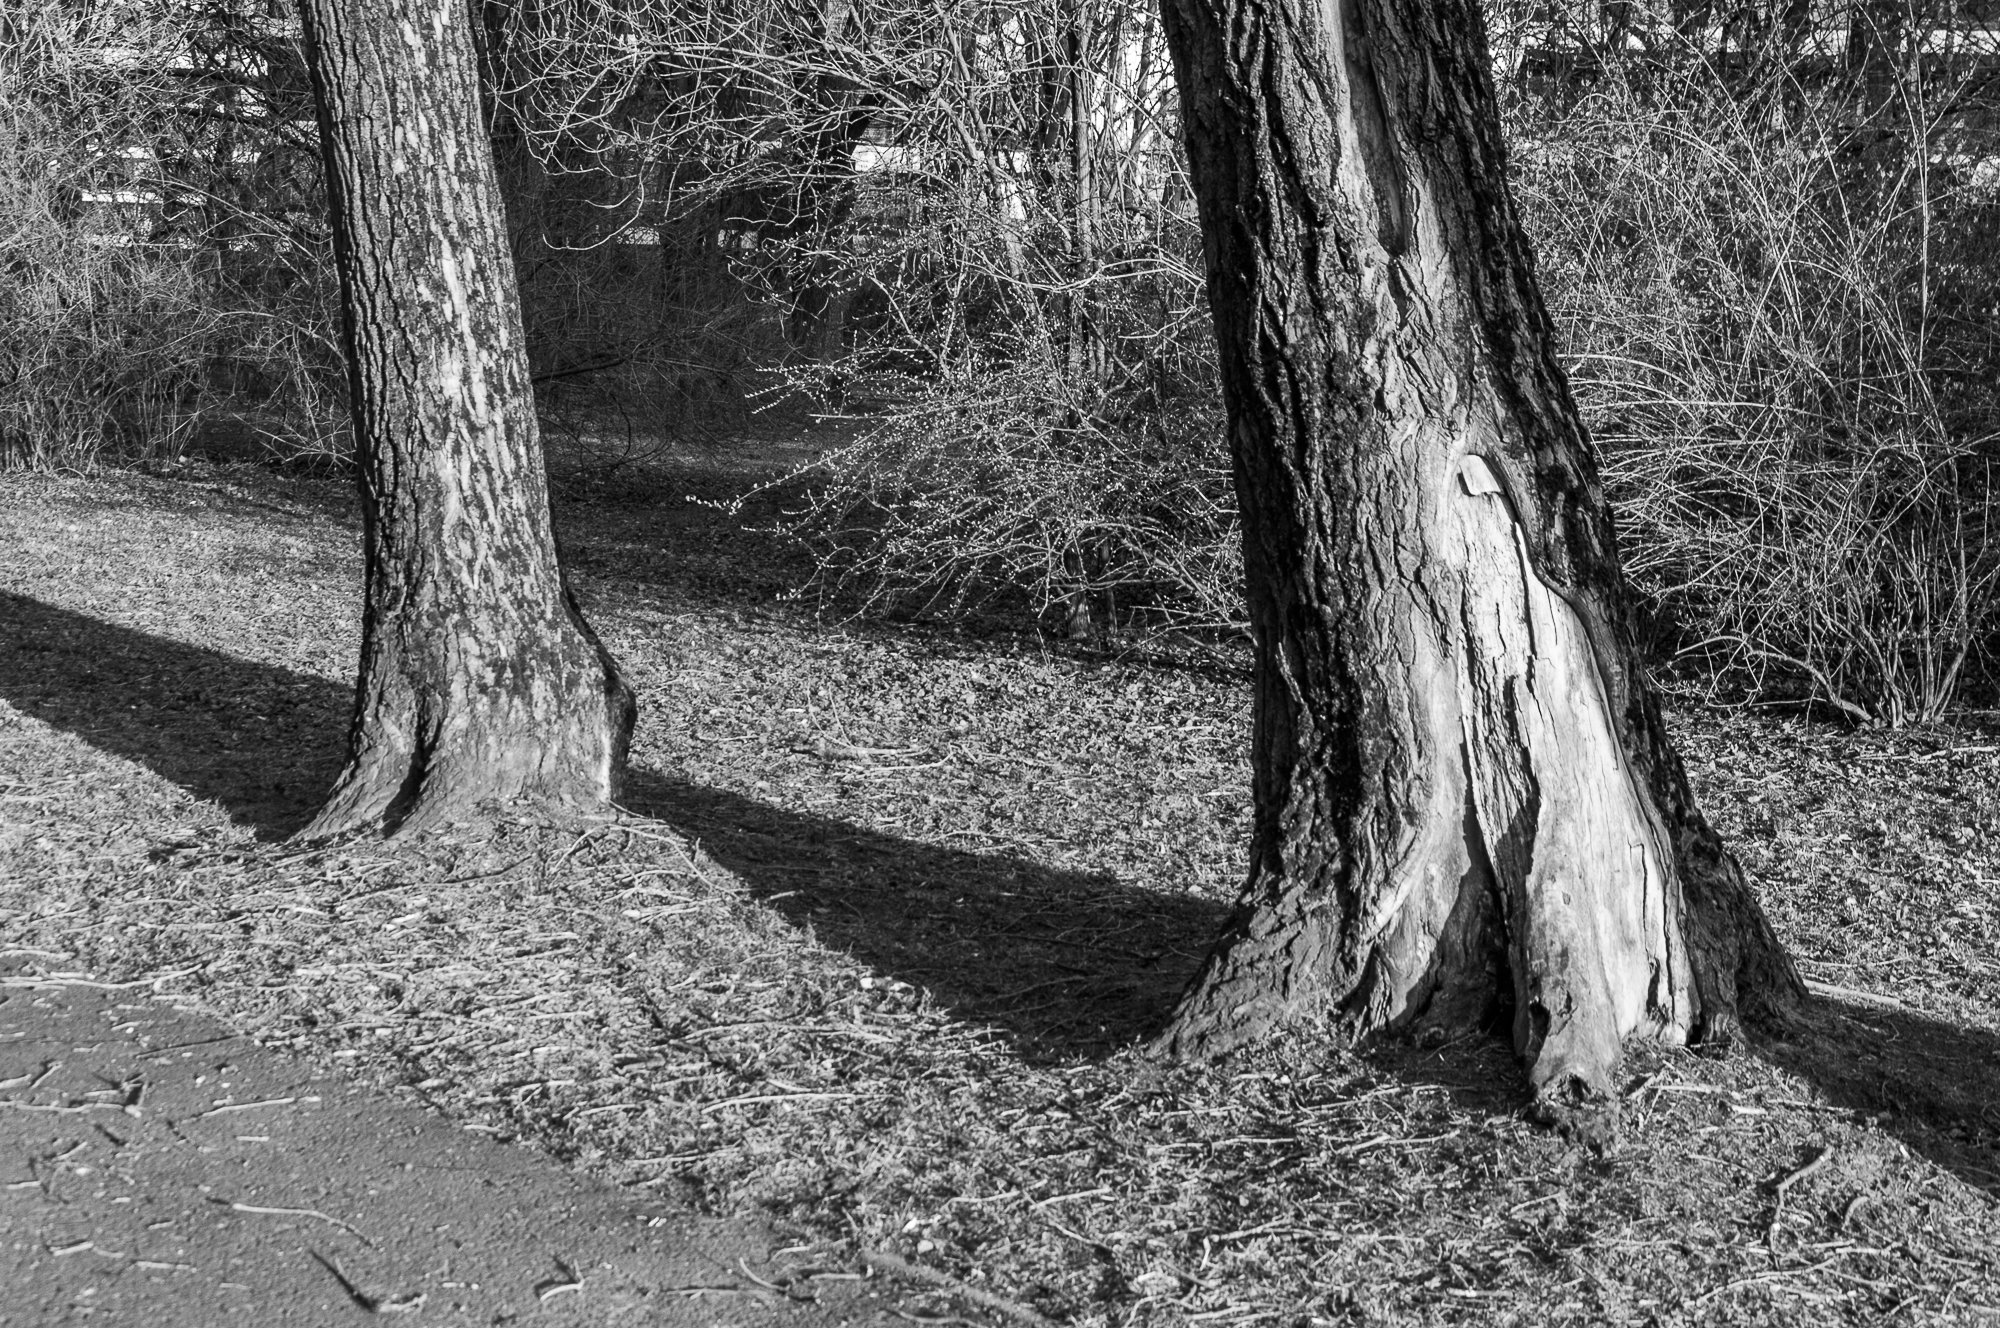 Adam Mazek Photography Warsaw (Warszawa) 2020. Post: "Photographic equipment." Minimalism. Tree. Balance.